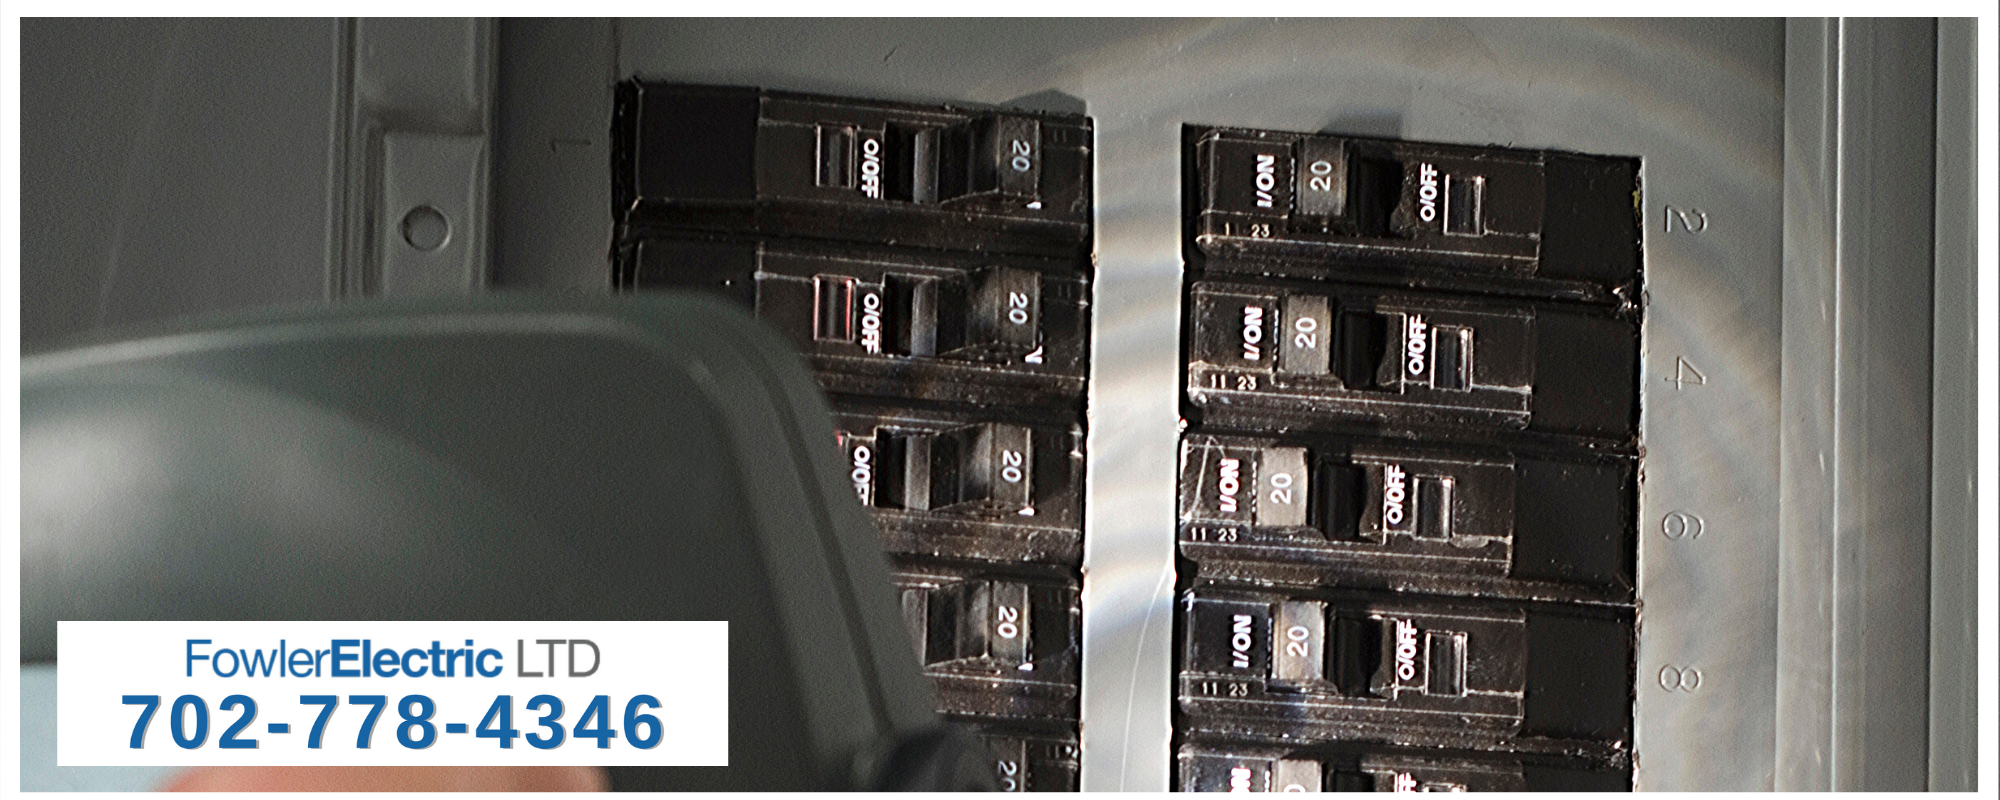 breaker panel labeled fowler electric ltd 702-778-4346